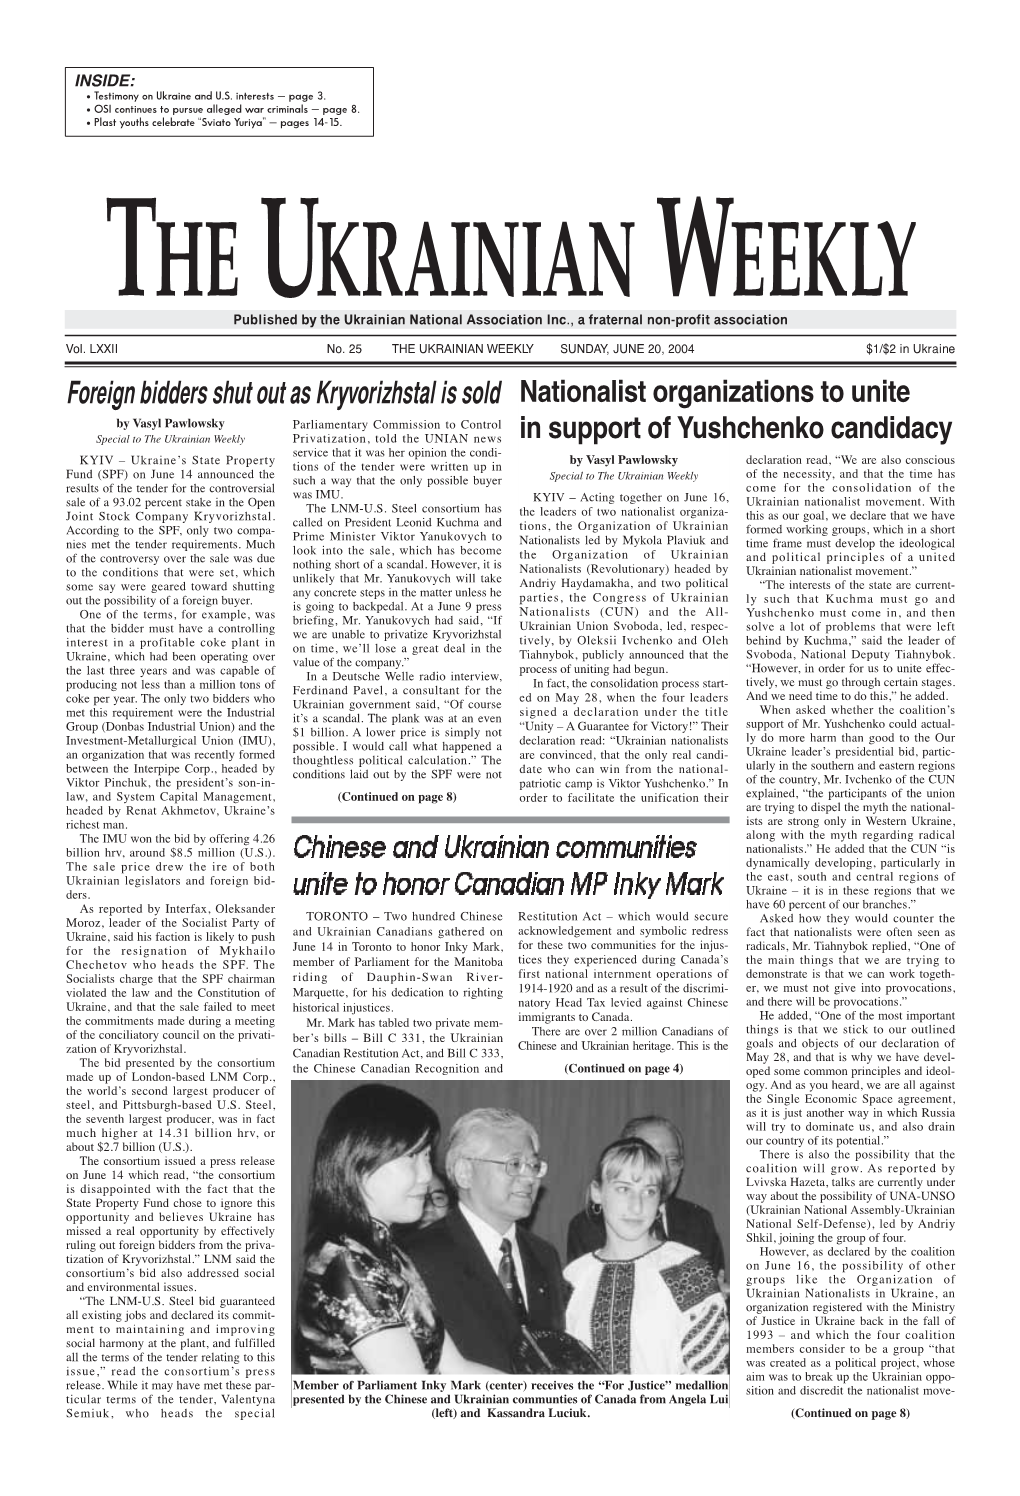 The Ukrainian Weekly 2004, No.25